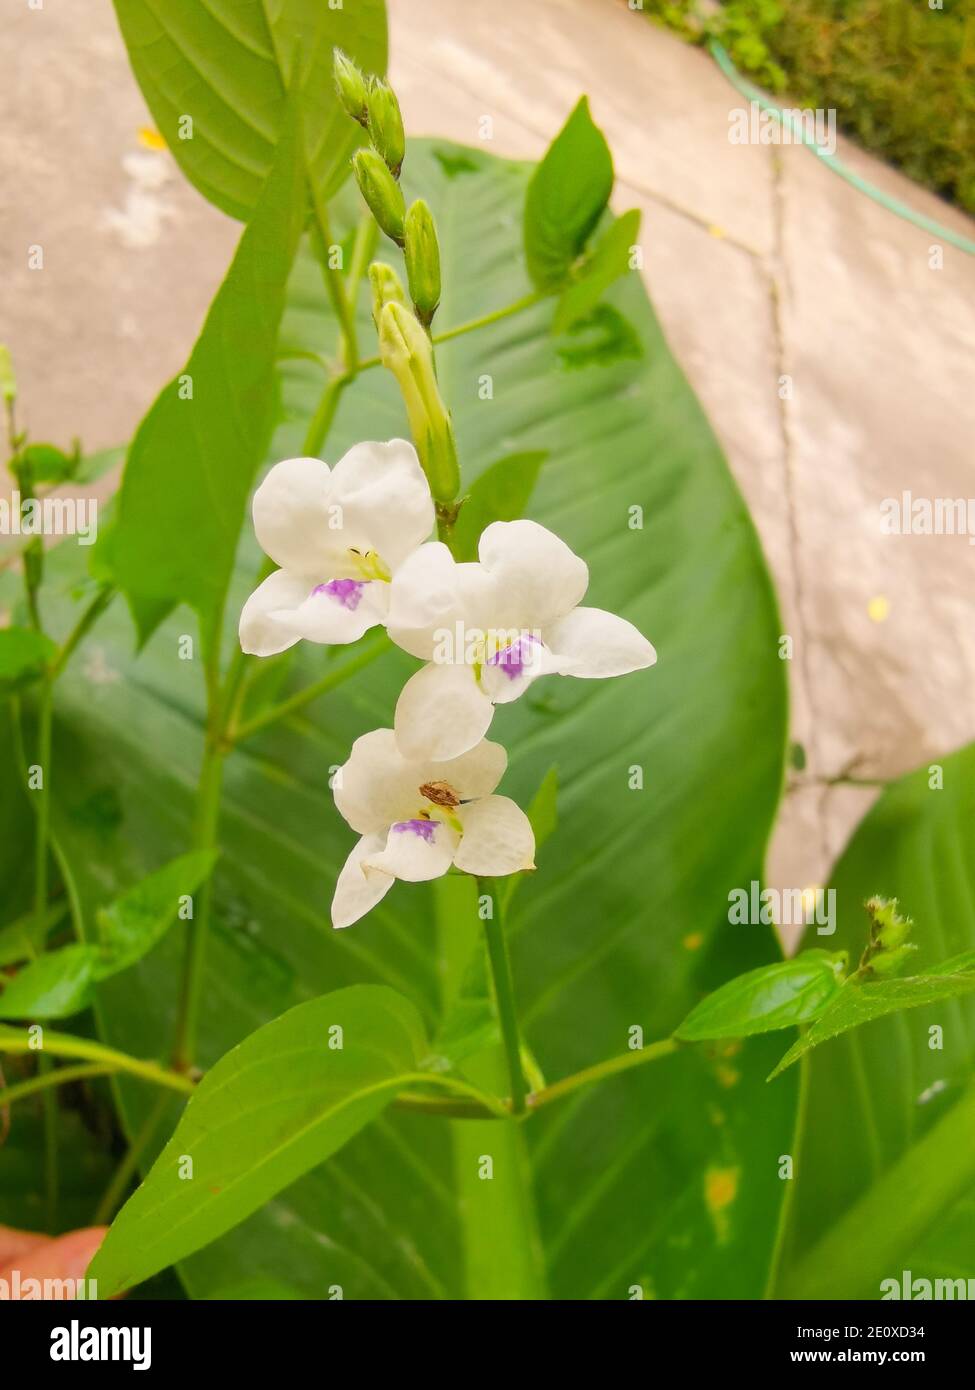 Asystasia flowers, white five-petal flower - light purple. Small flower shrub. Thai traditional herbs. Stock Photo